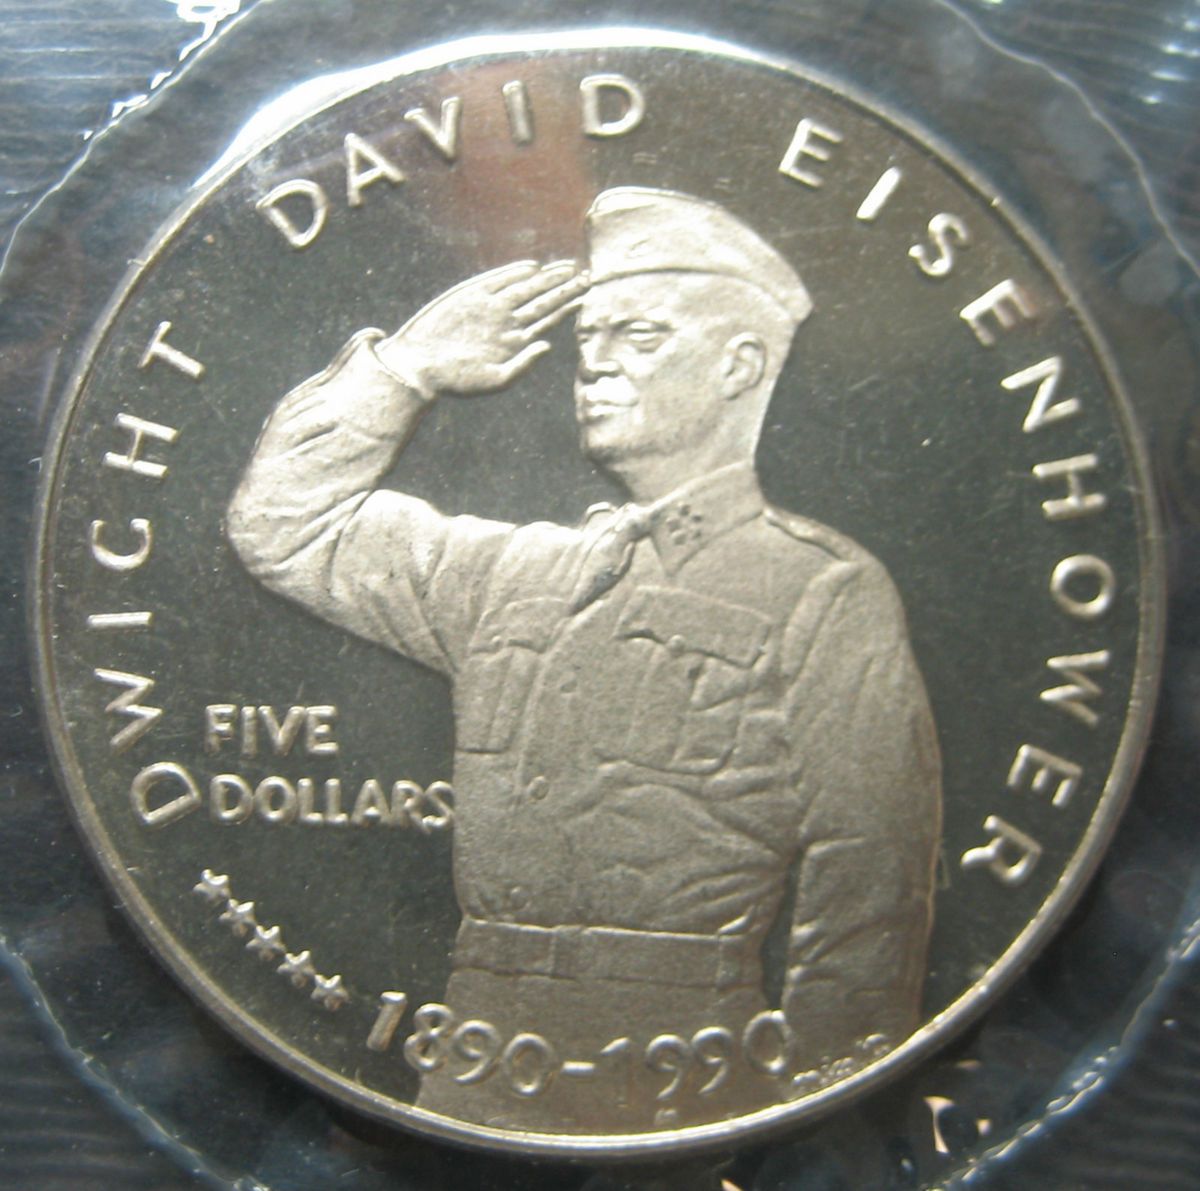 1990 Marshall Islands Dwight D. Eisenhower 5 Dollar Coin